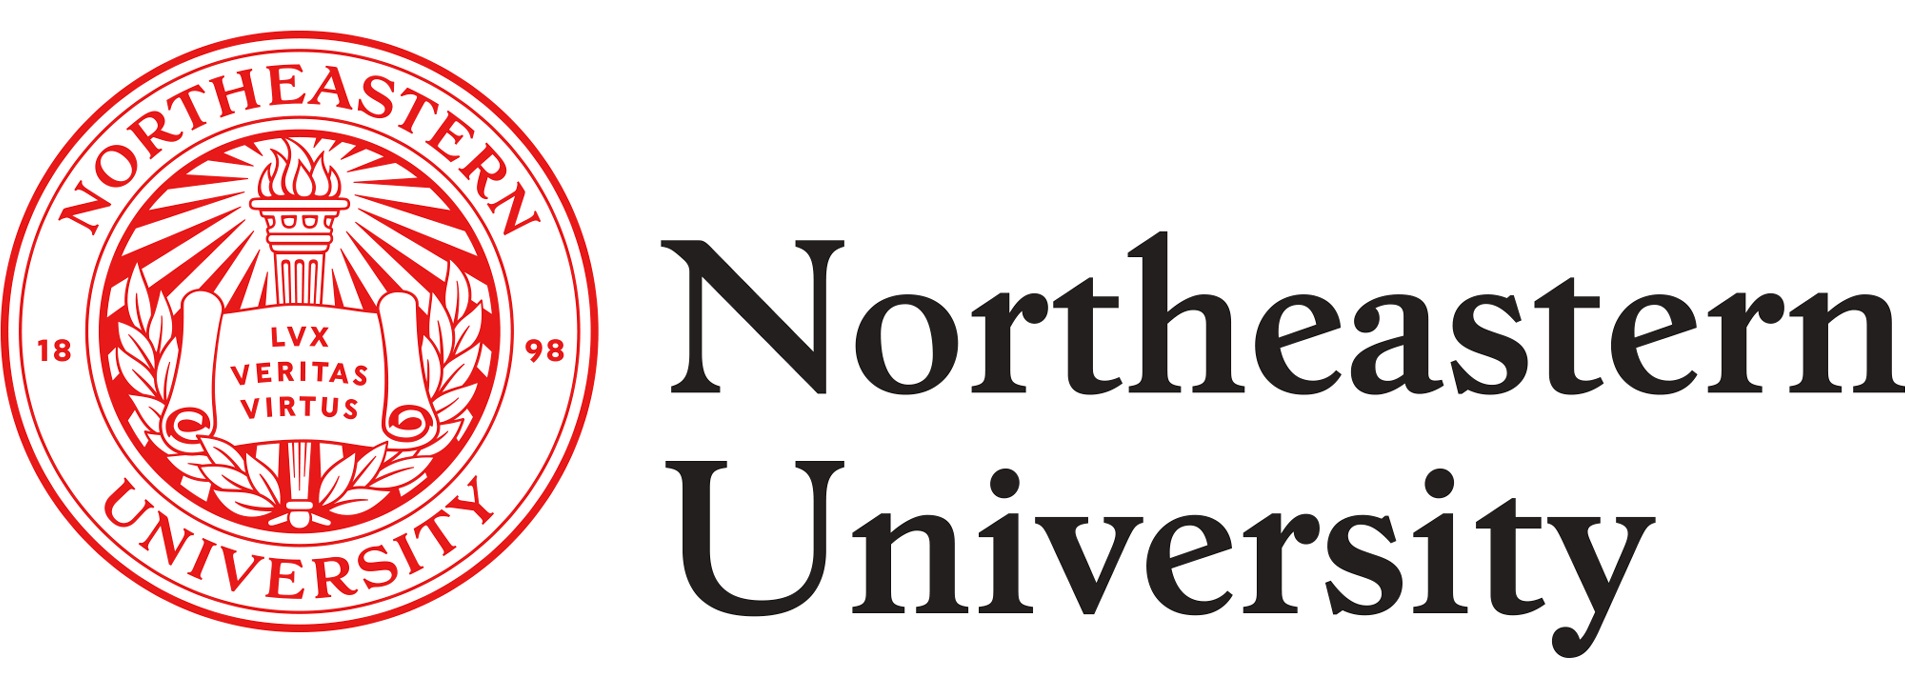 northeastern_university_logo.png